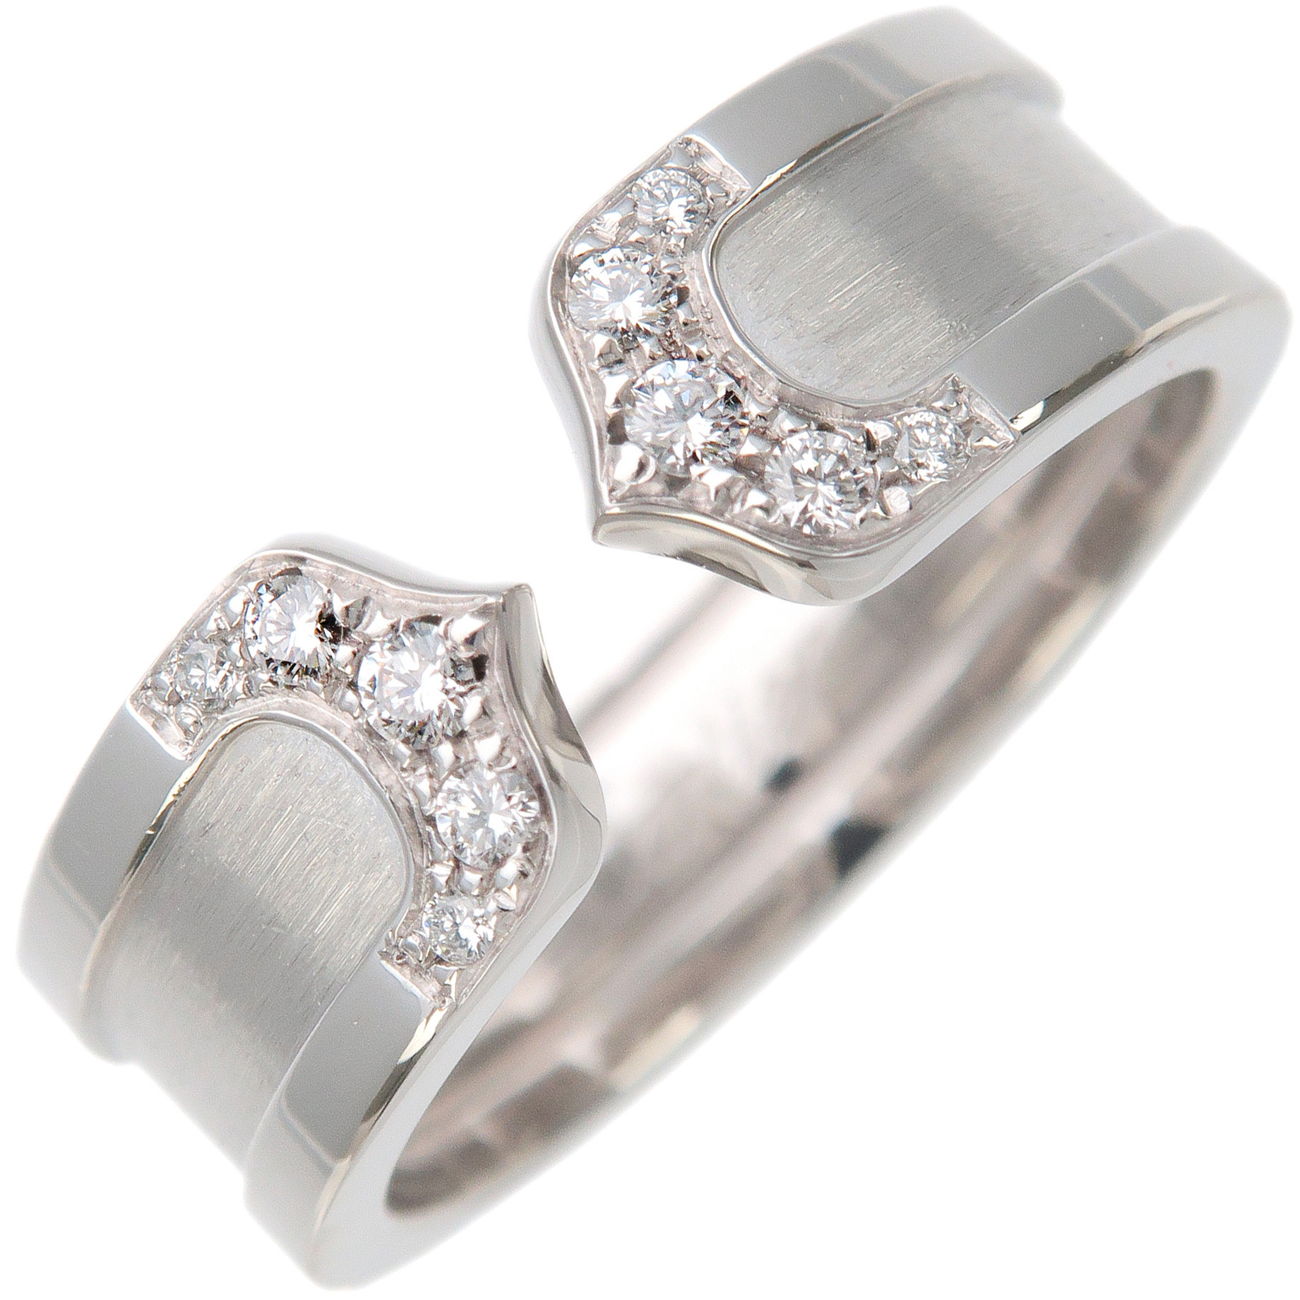 Cartier-C2-Diamond-Ring-SM-K18WG-White-Gold-#53-US6.5-7-EU53.5